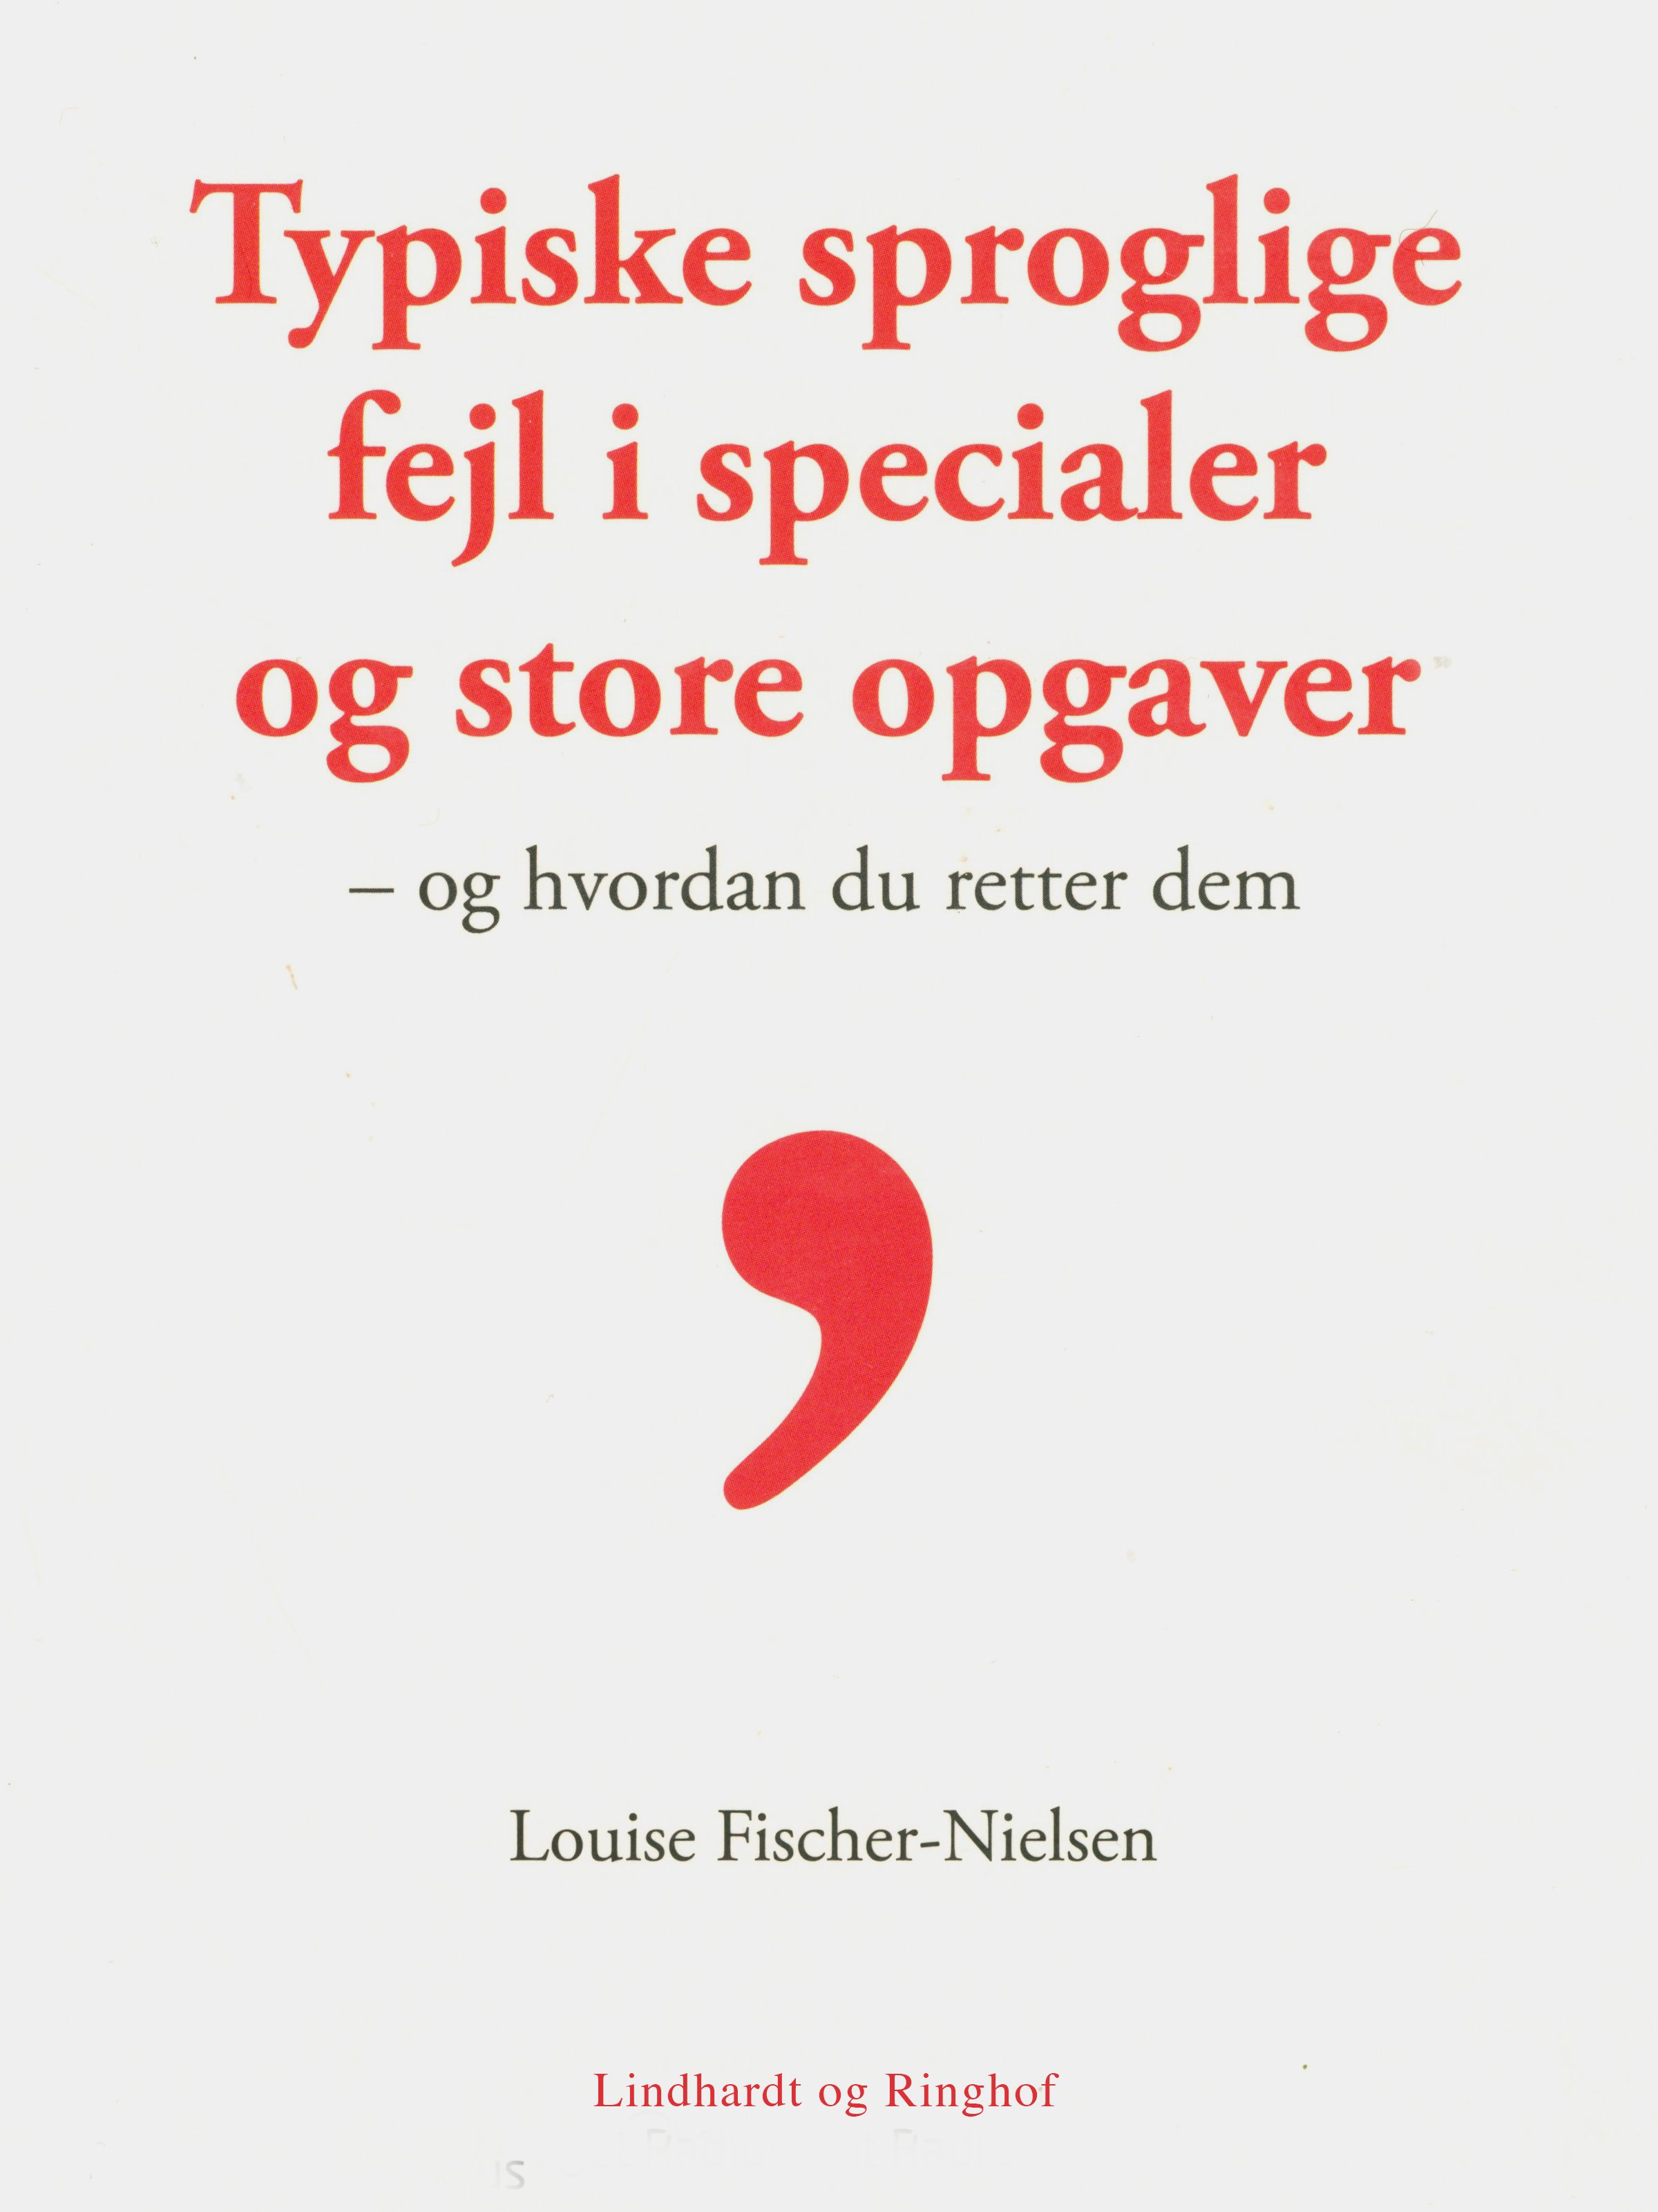 Typiske sproglige fejl, e-bok av Louise Fischer Nielsen